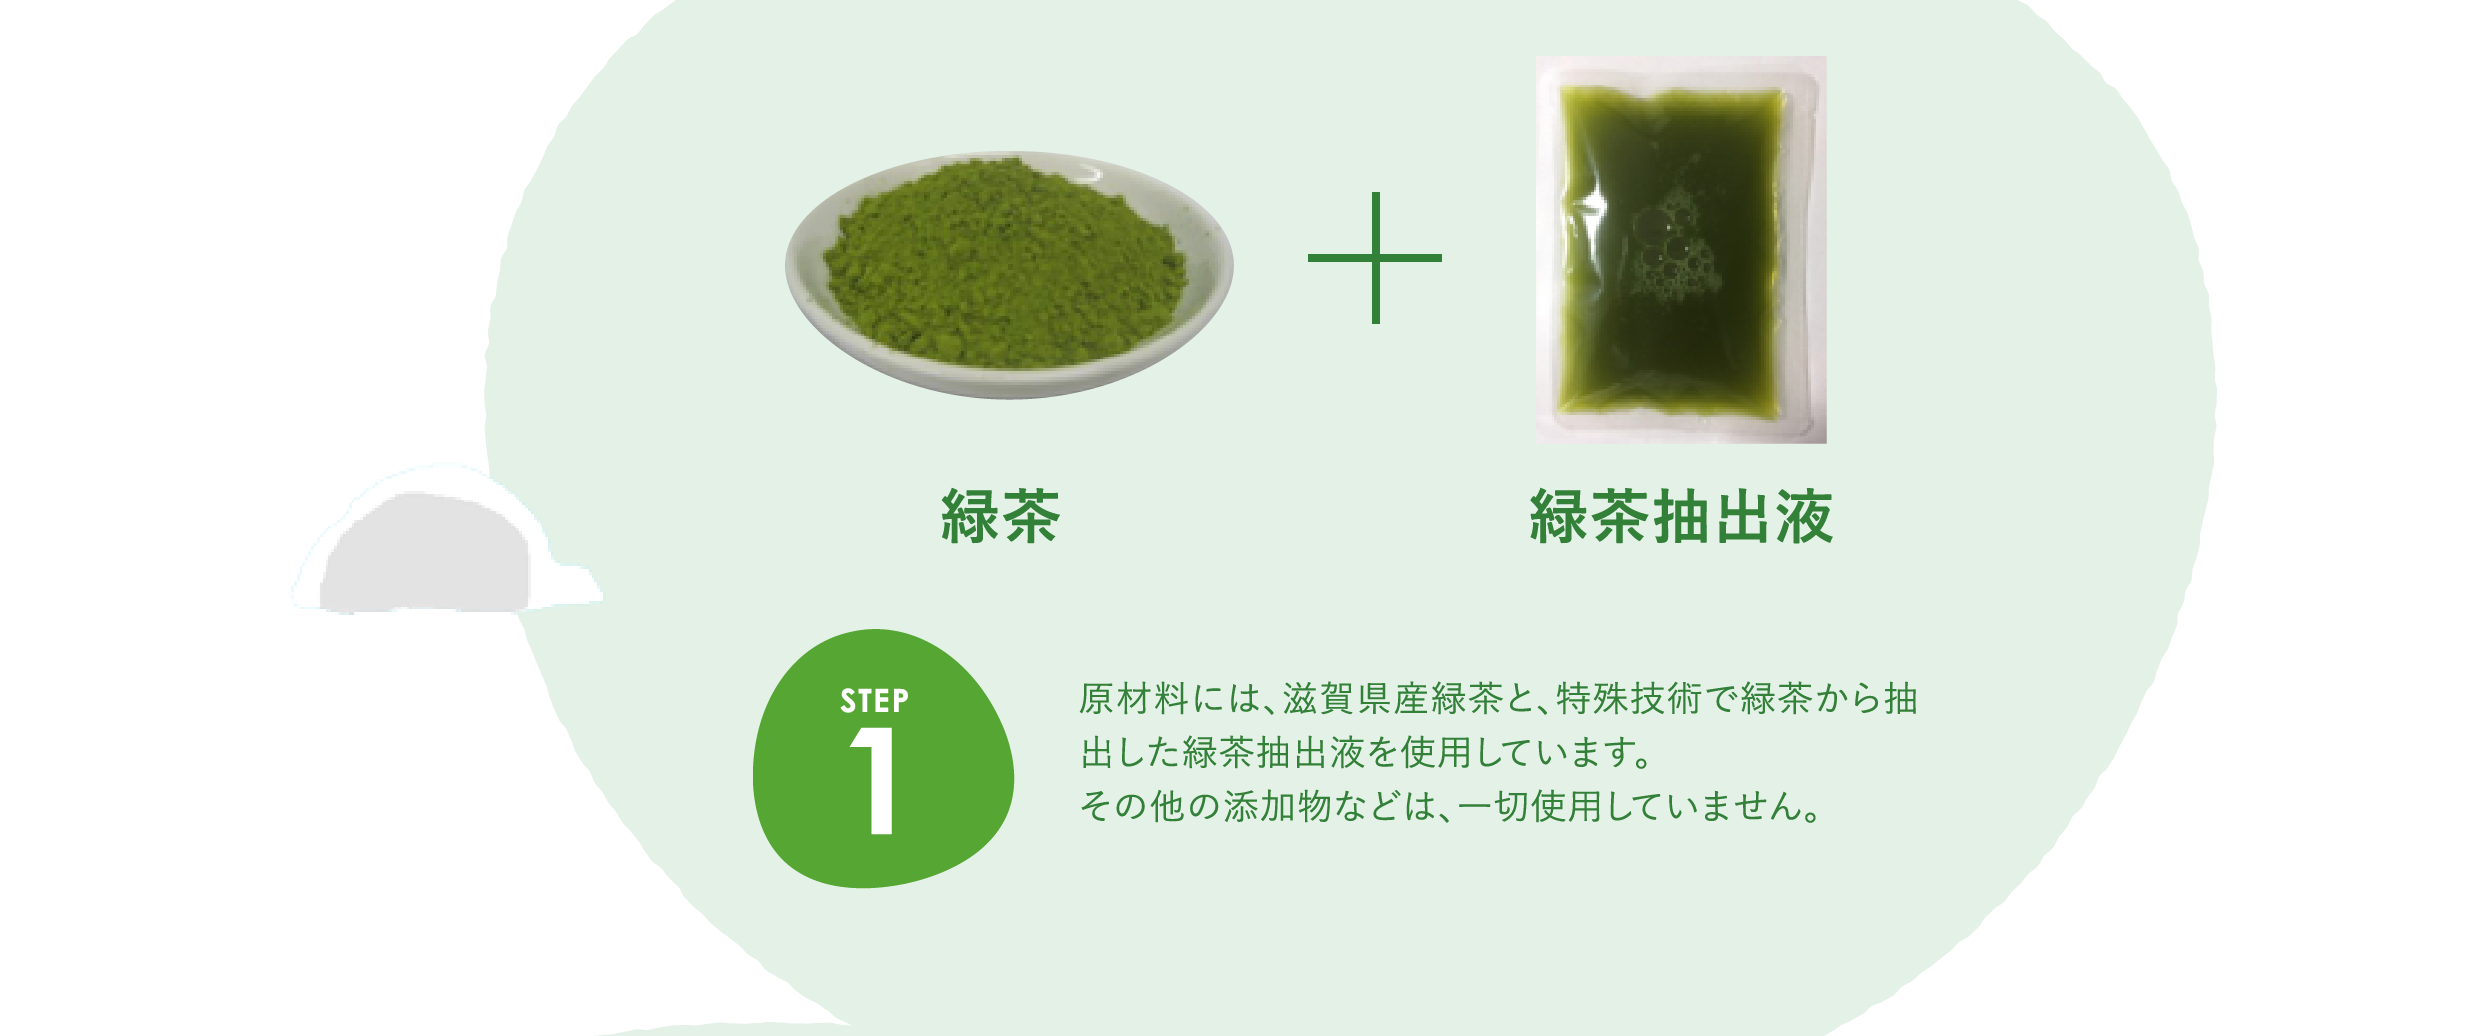 step1 緑茶+緑茶抽出液 原材料には、滋賀県産緑茶と、特殊技術で緑茶から抽出した緑茶抽出液を使用しています。その他の添加物などは、一切使用していません。